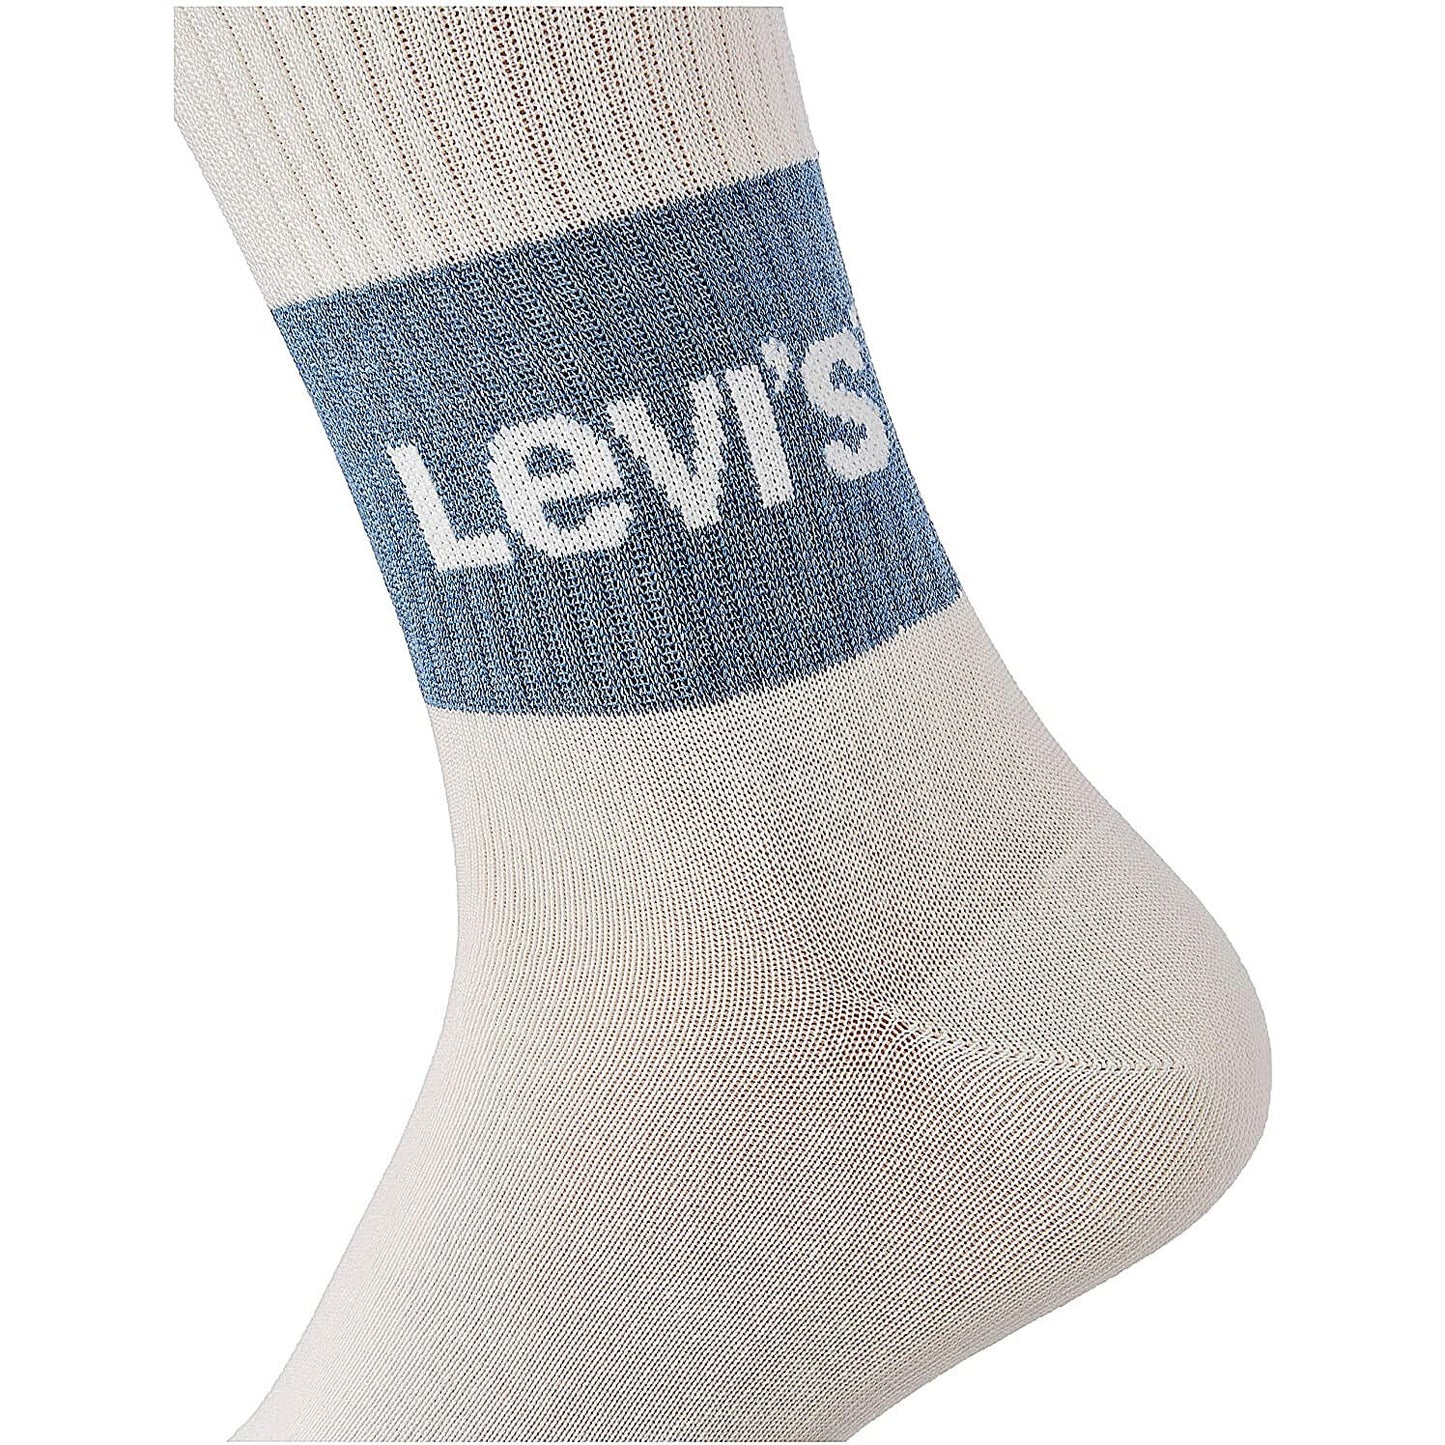 Levis Unisex Sustainable Regular Cut (2-Pack) Blue / White